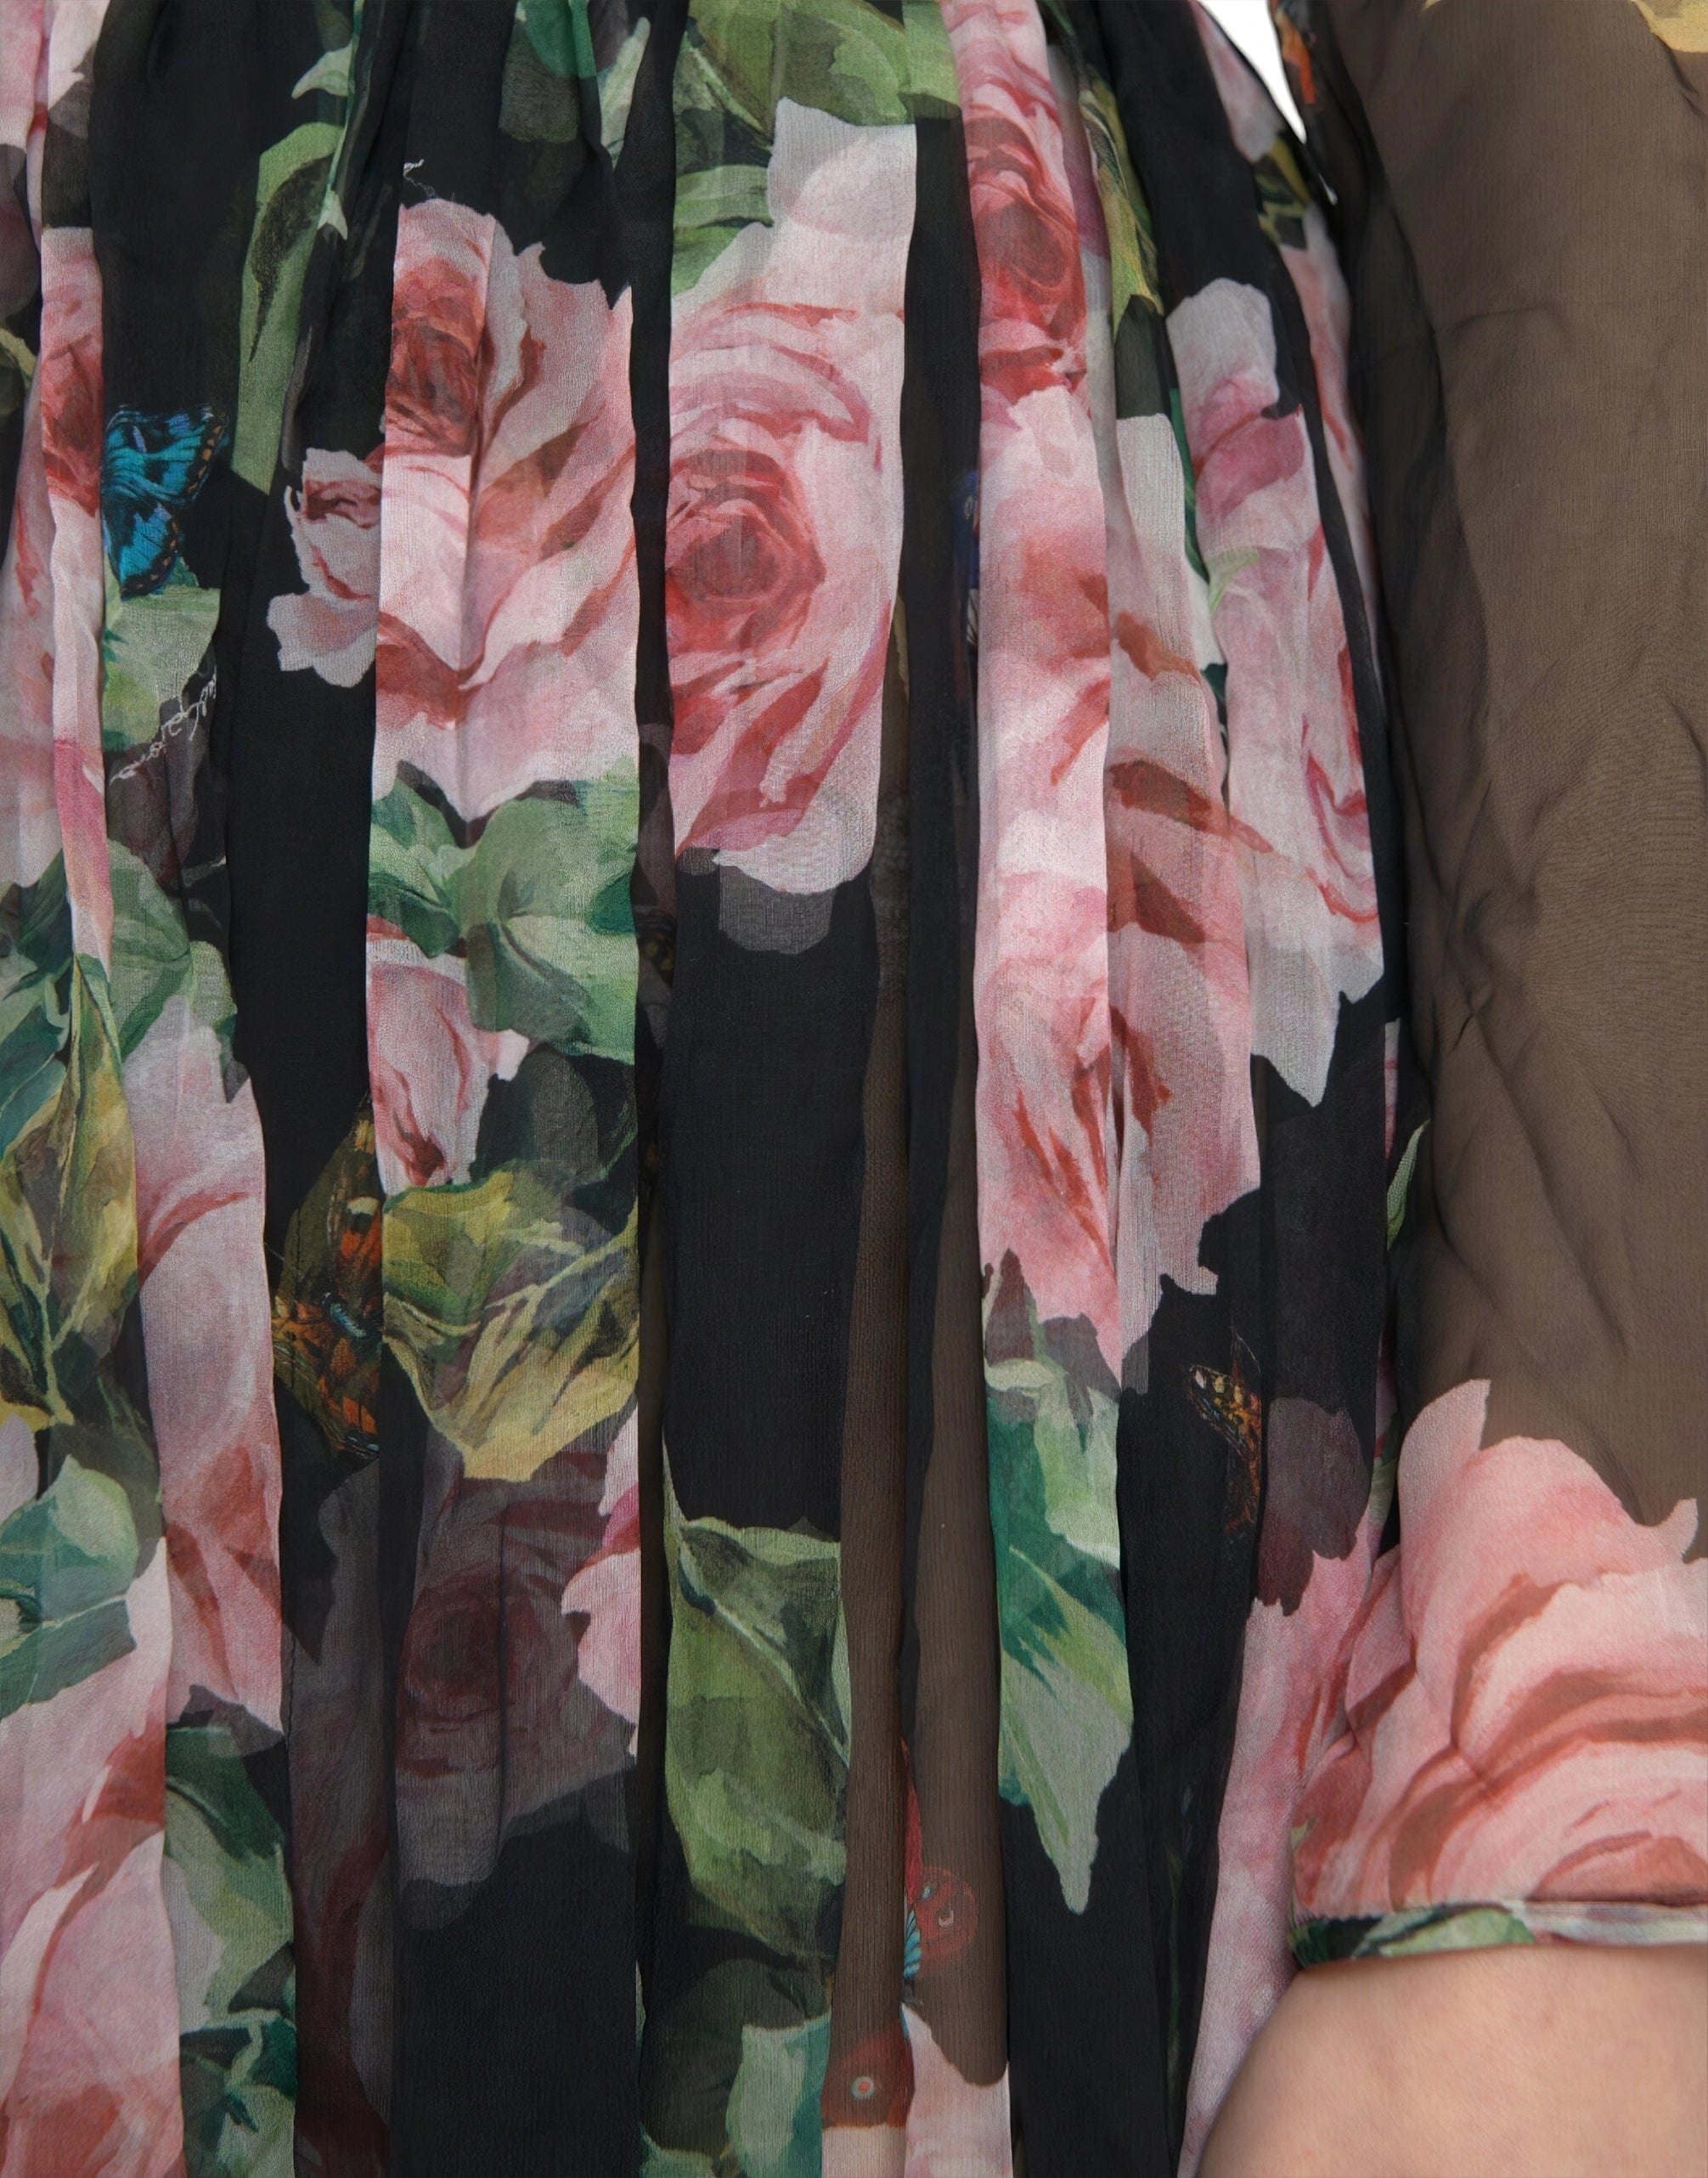 Silk Floral Maxi Dress